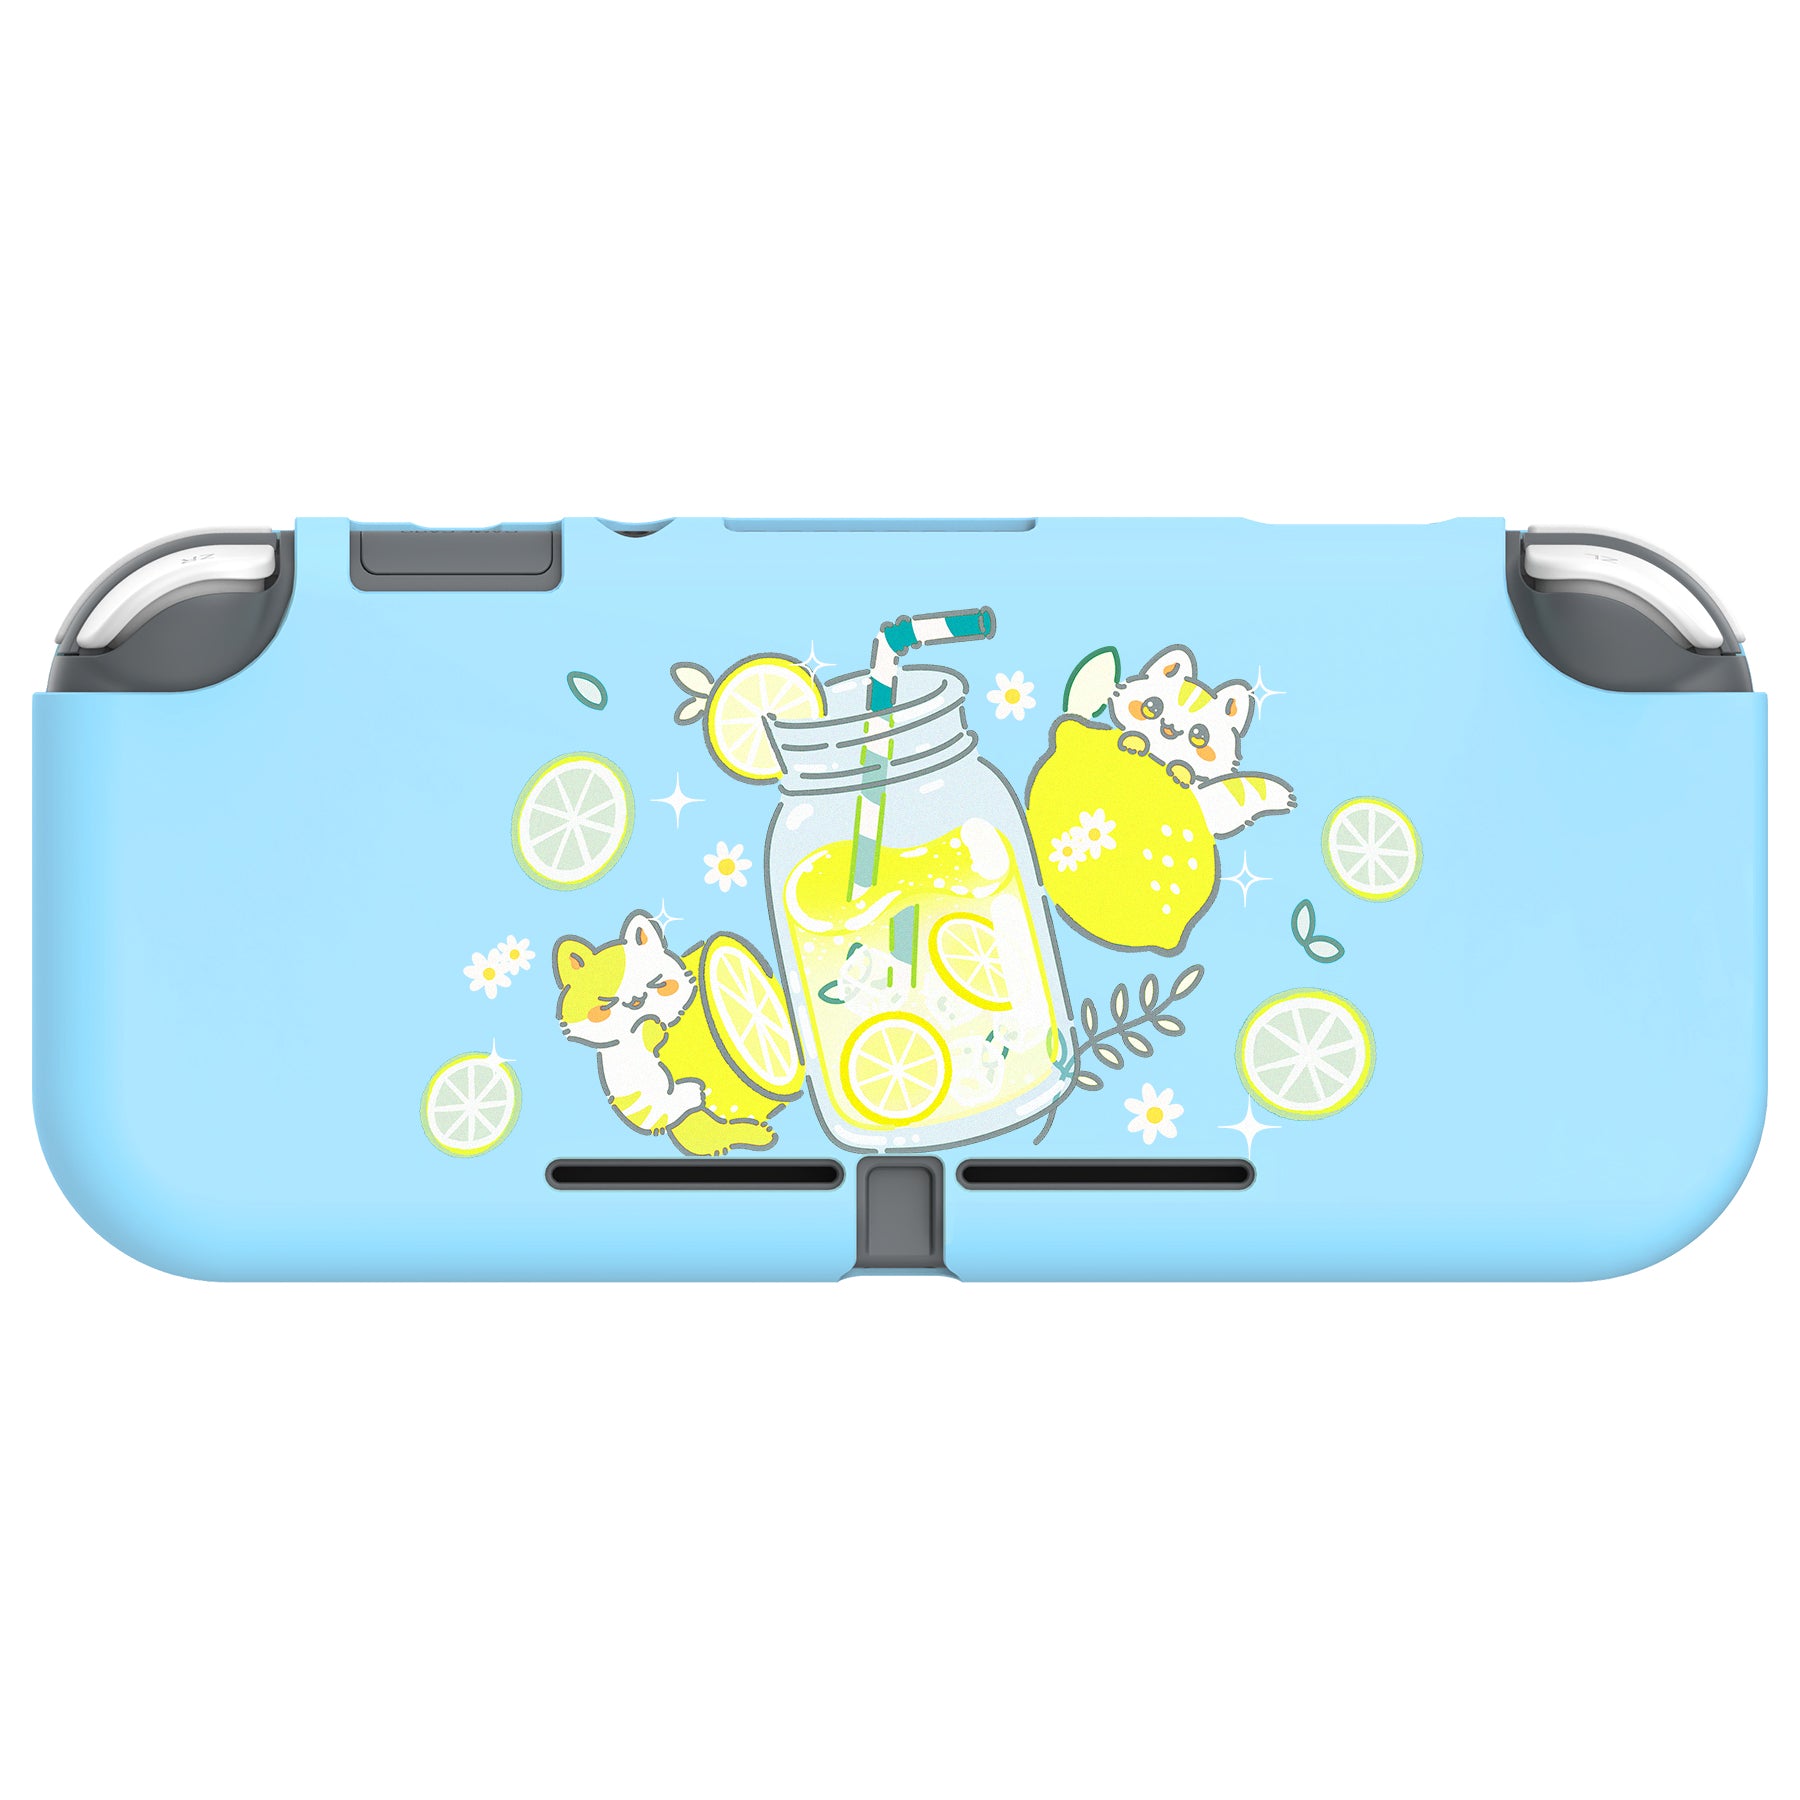 PlayVital Lemonade Kitty Custom Protective Case for NS Switch Lite, Soft TPU Slim Case Cover for NS Switch Lite - LTU6022 PlayVital